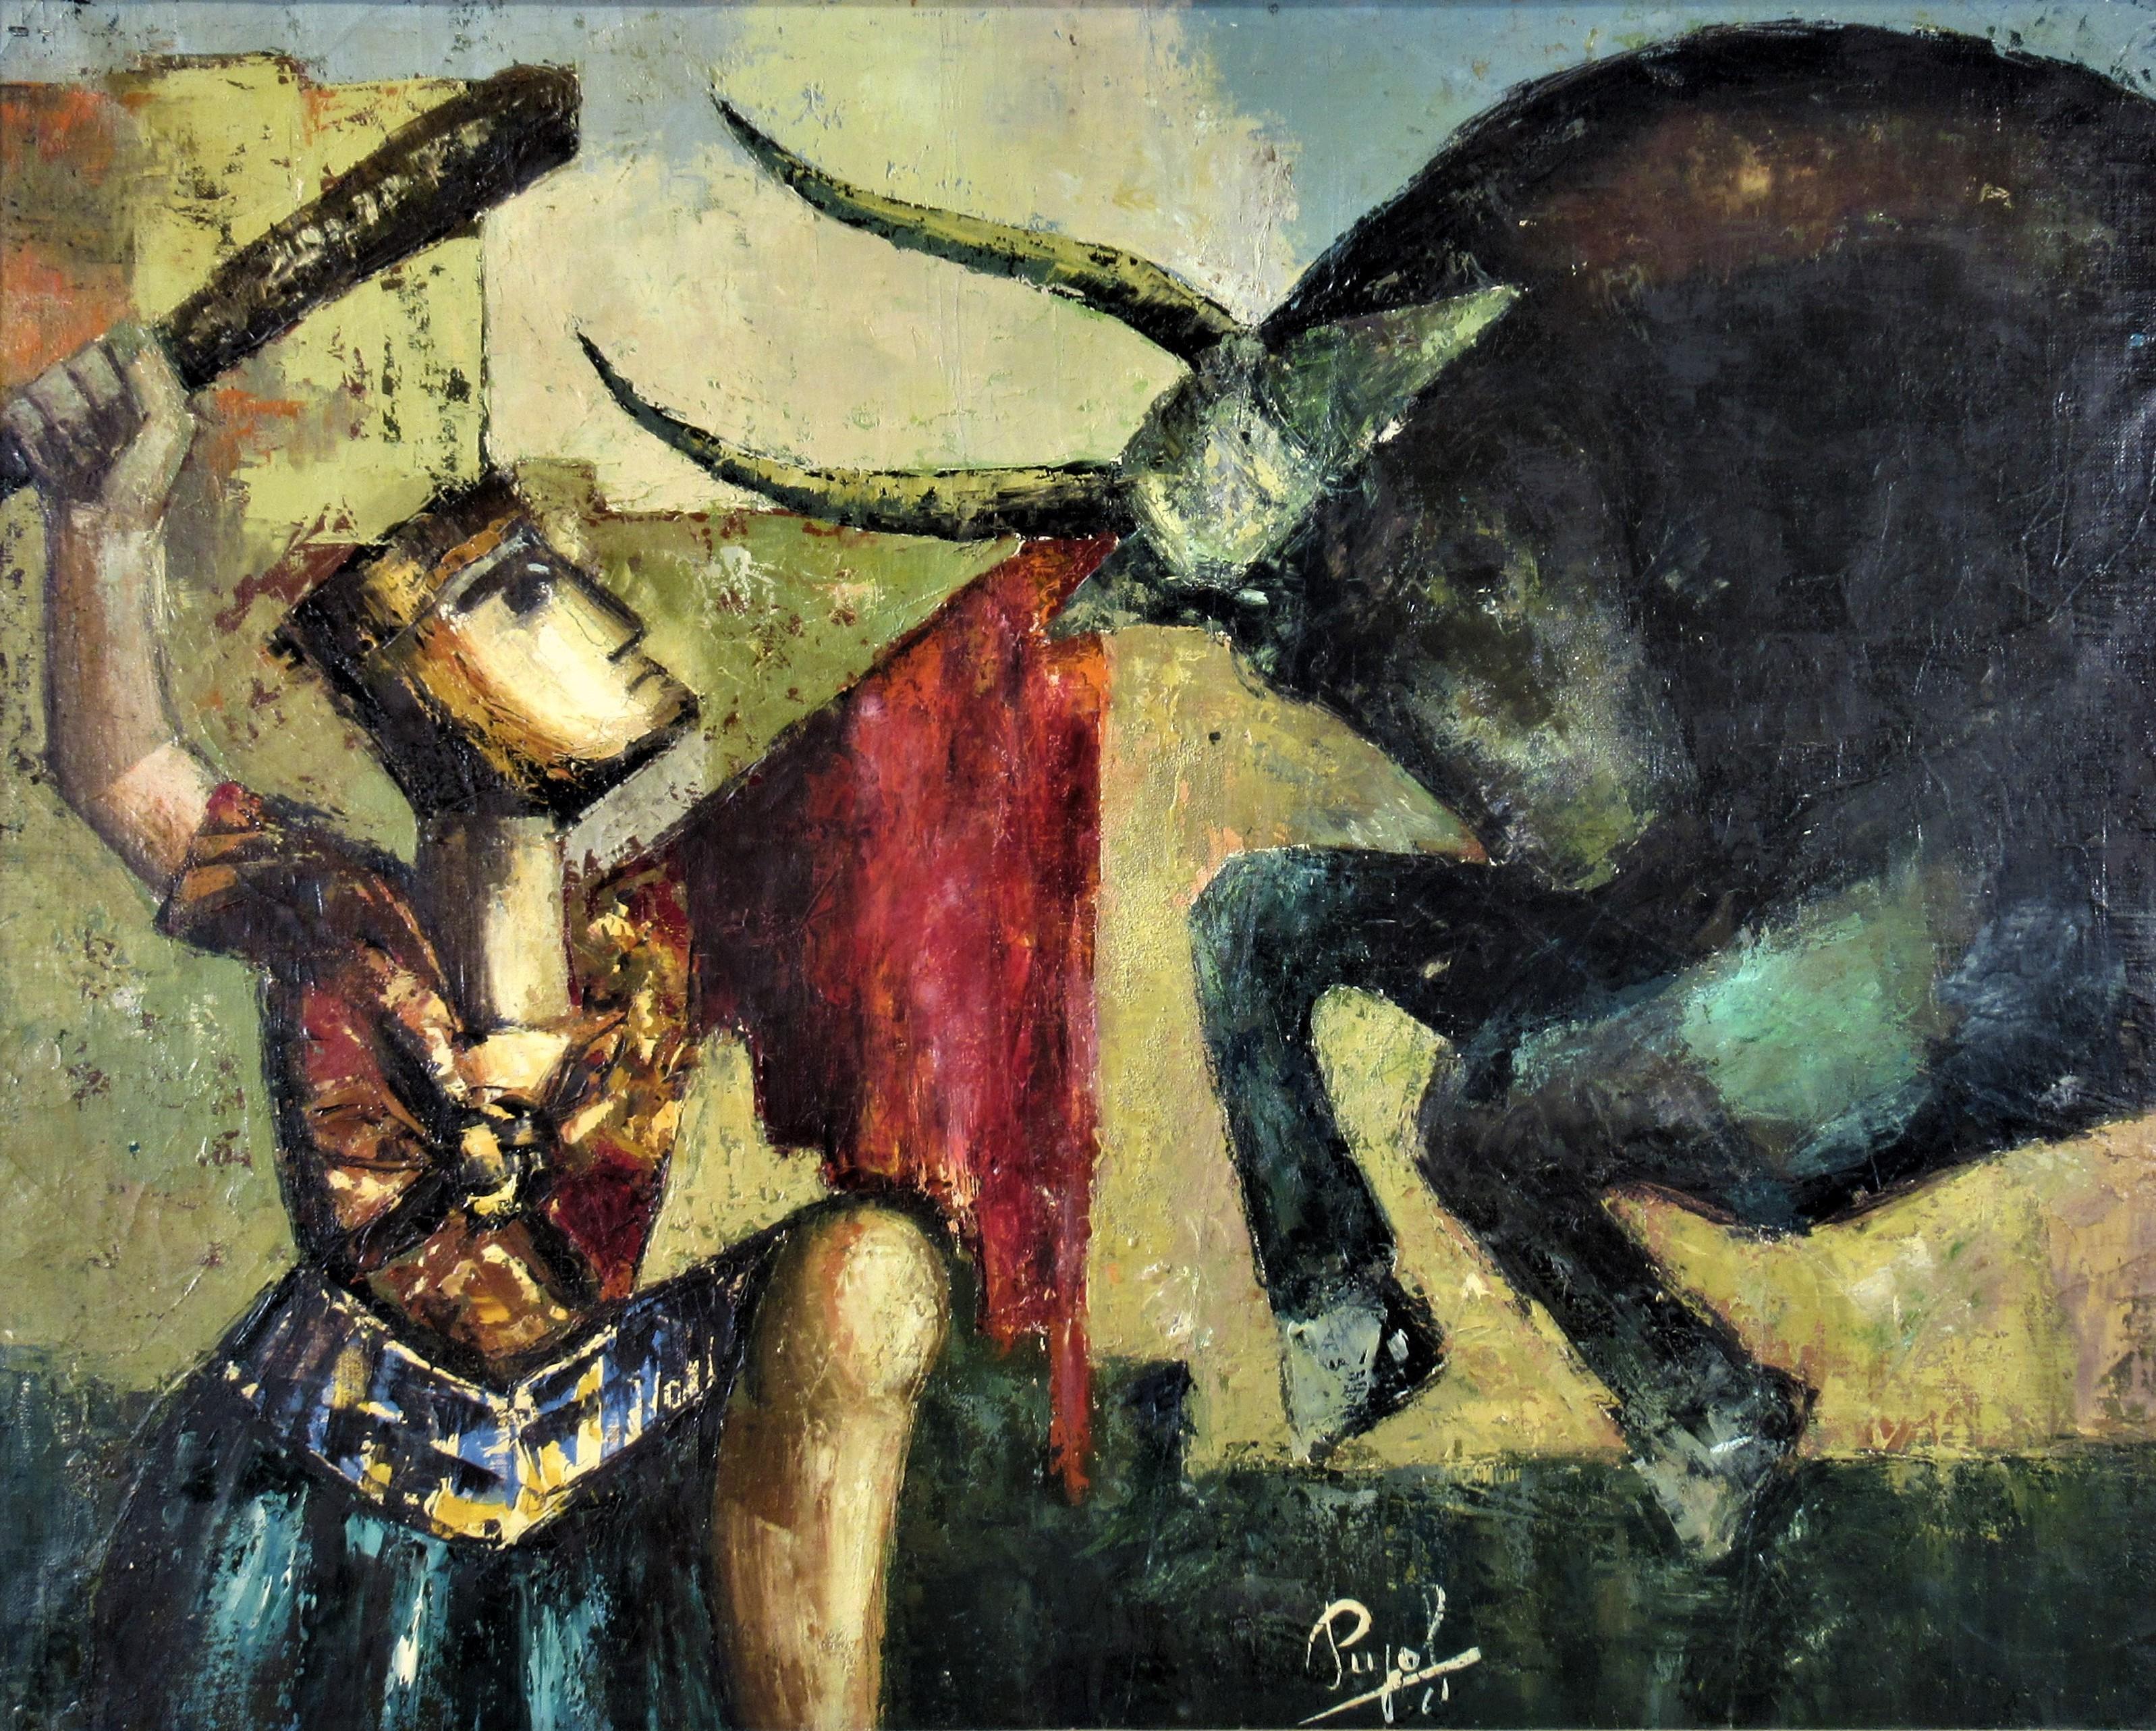 Lucha Con El Toro - Painting by Francisco Pujol